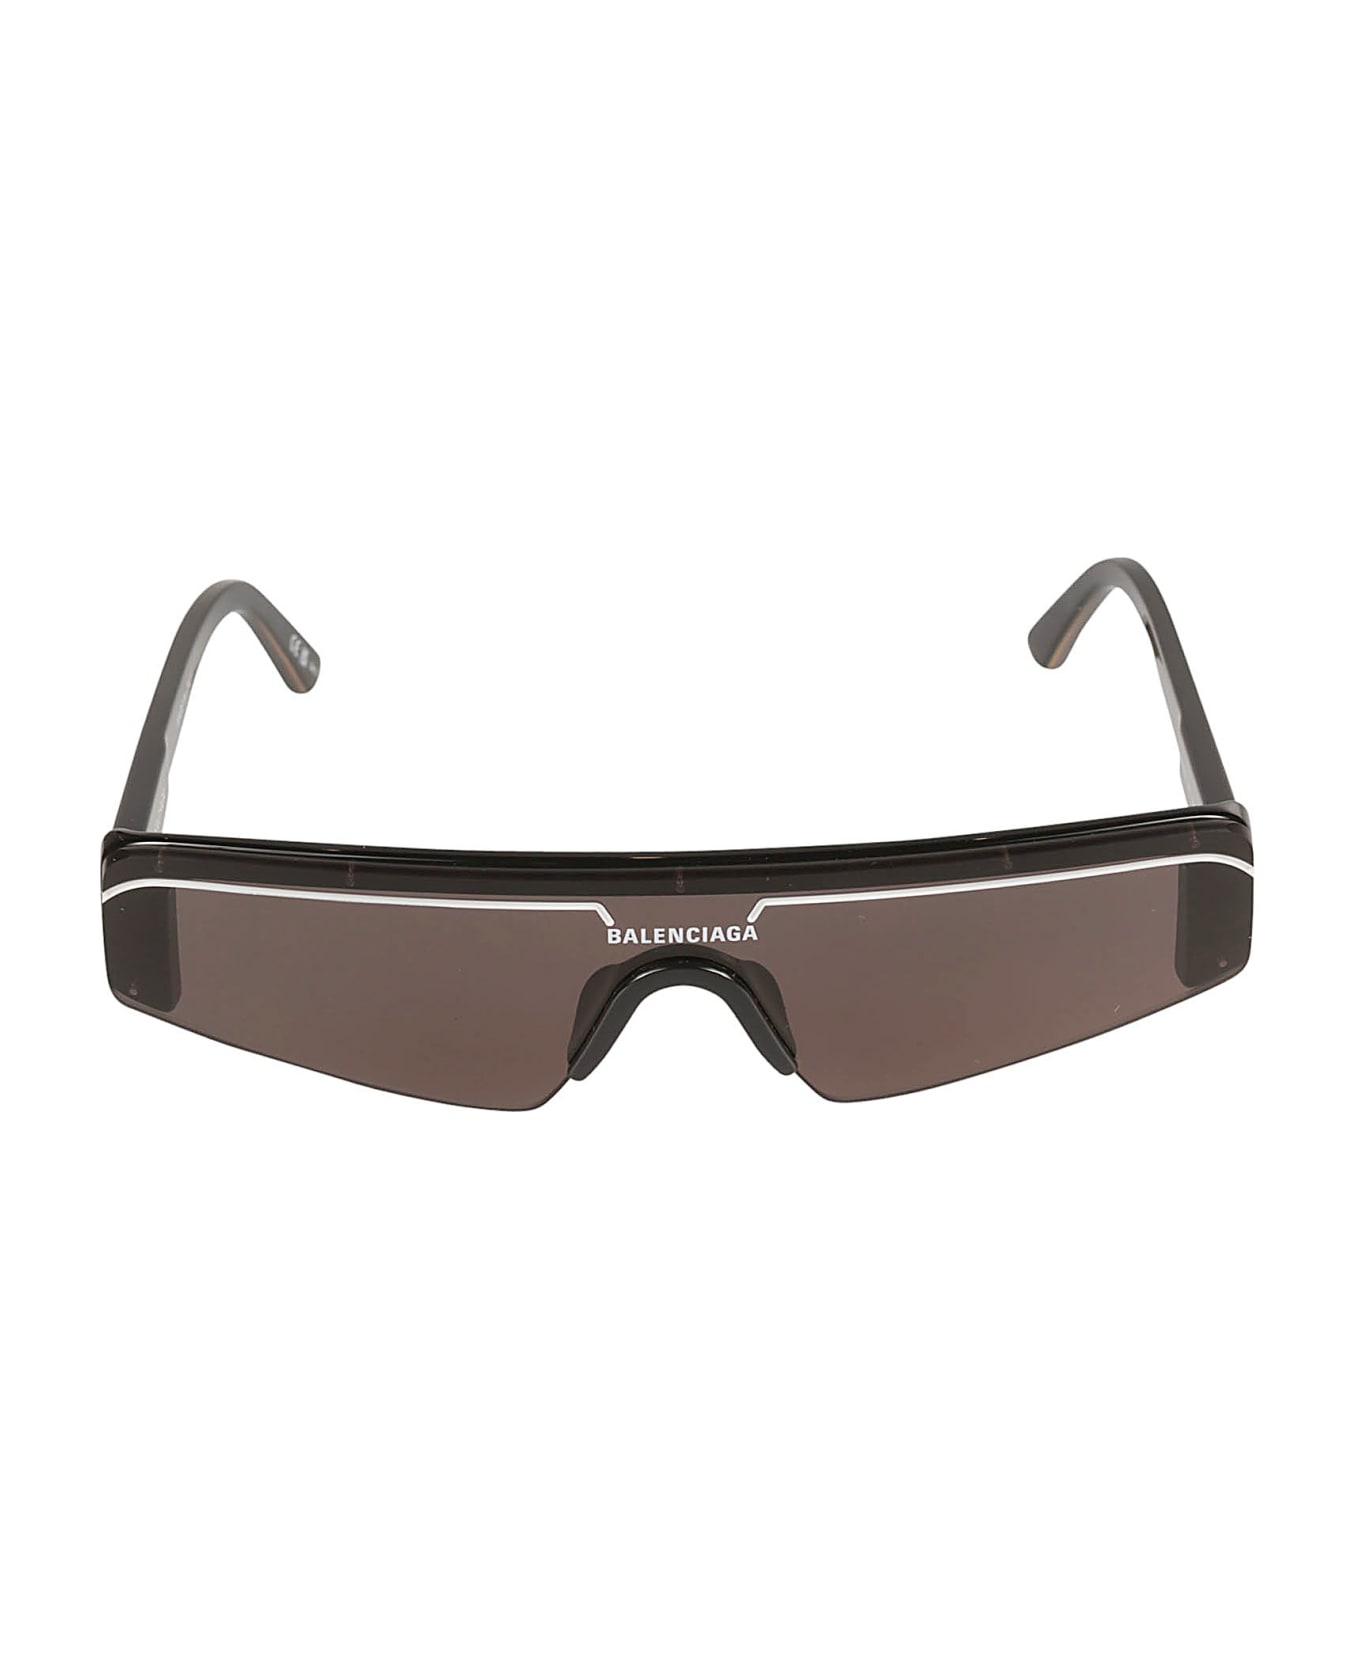 Balenciaga Eyewear Ski-style Sunglasses - Black/Grey